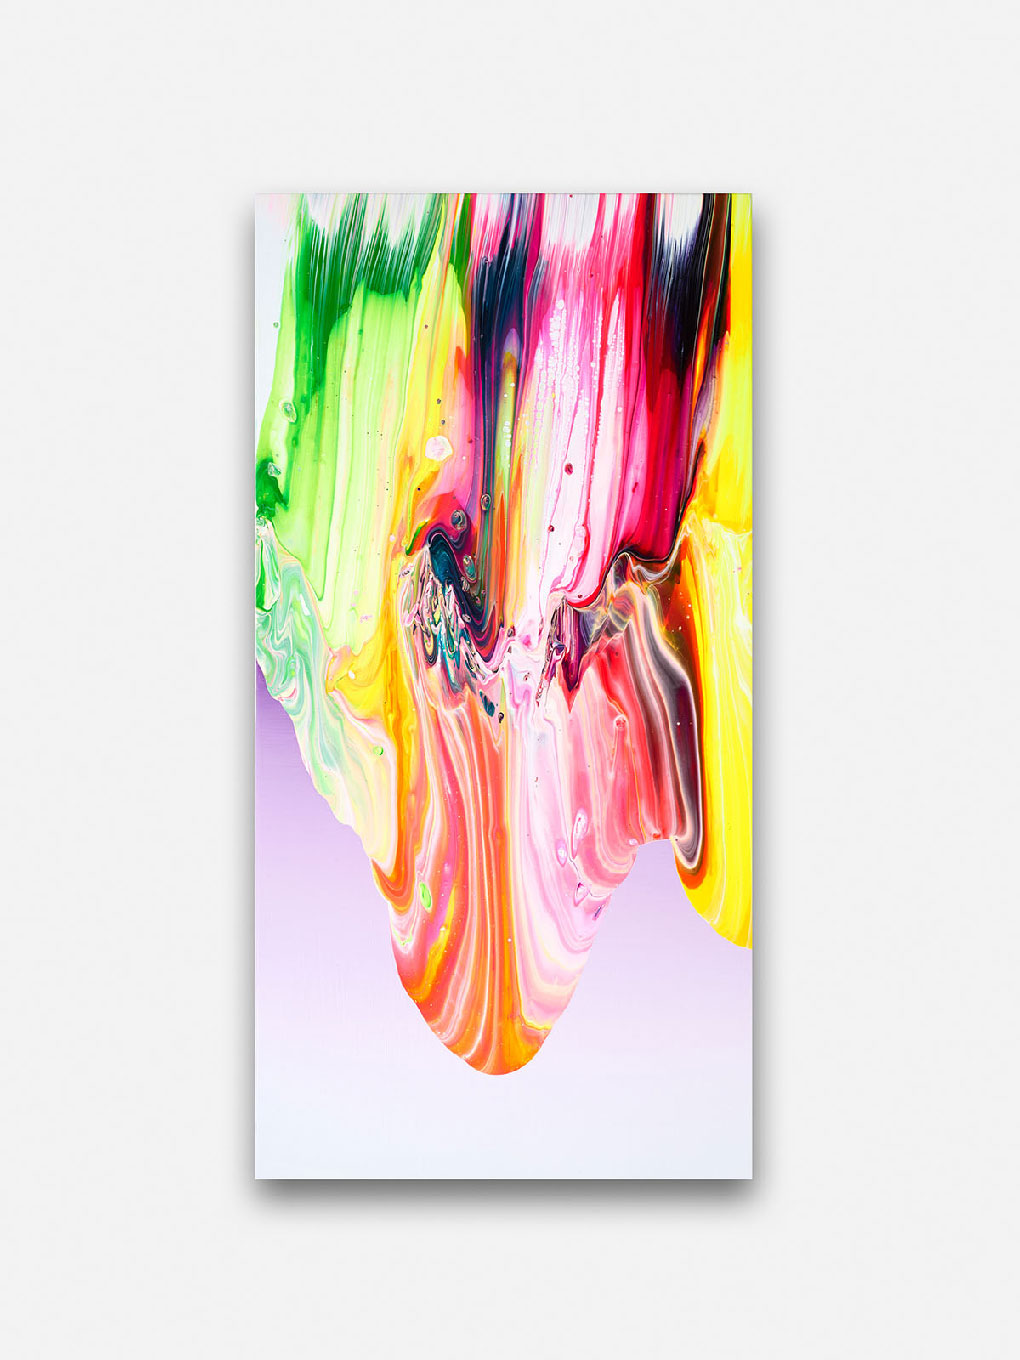 Yago Hortal - SP87. 2015. Acrylic on linen. 92 x 46 cm